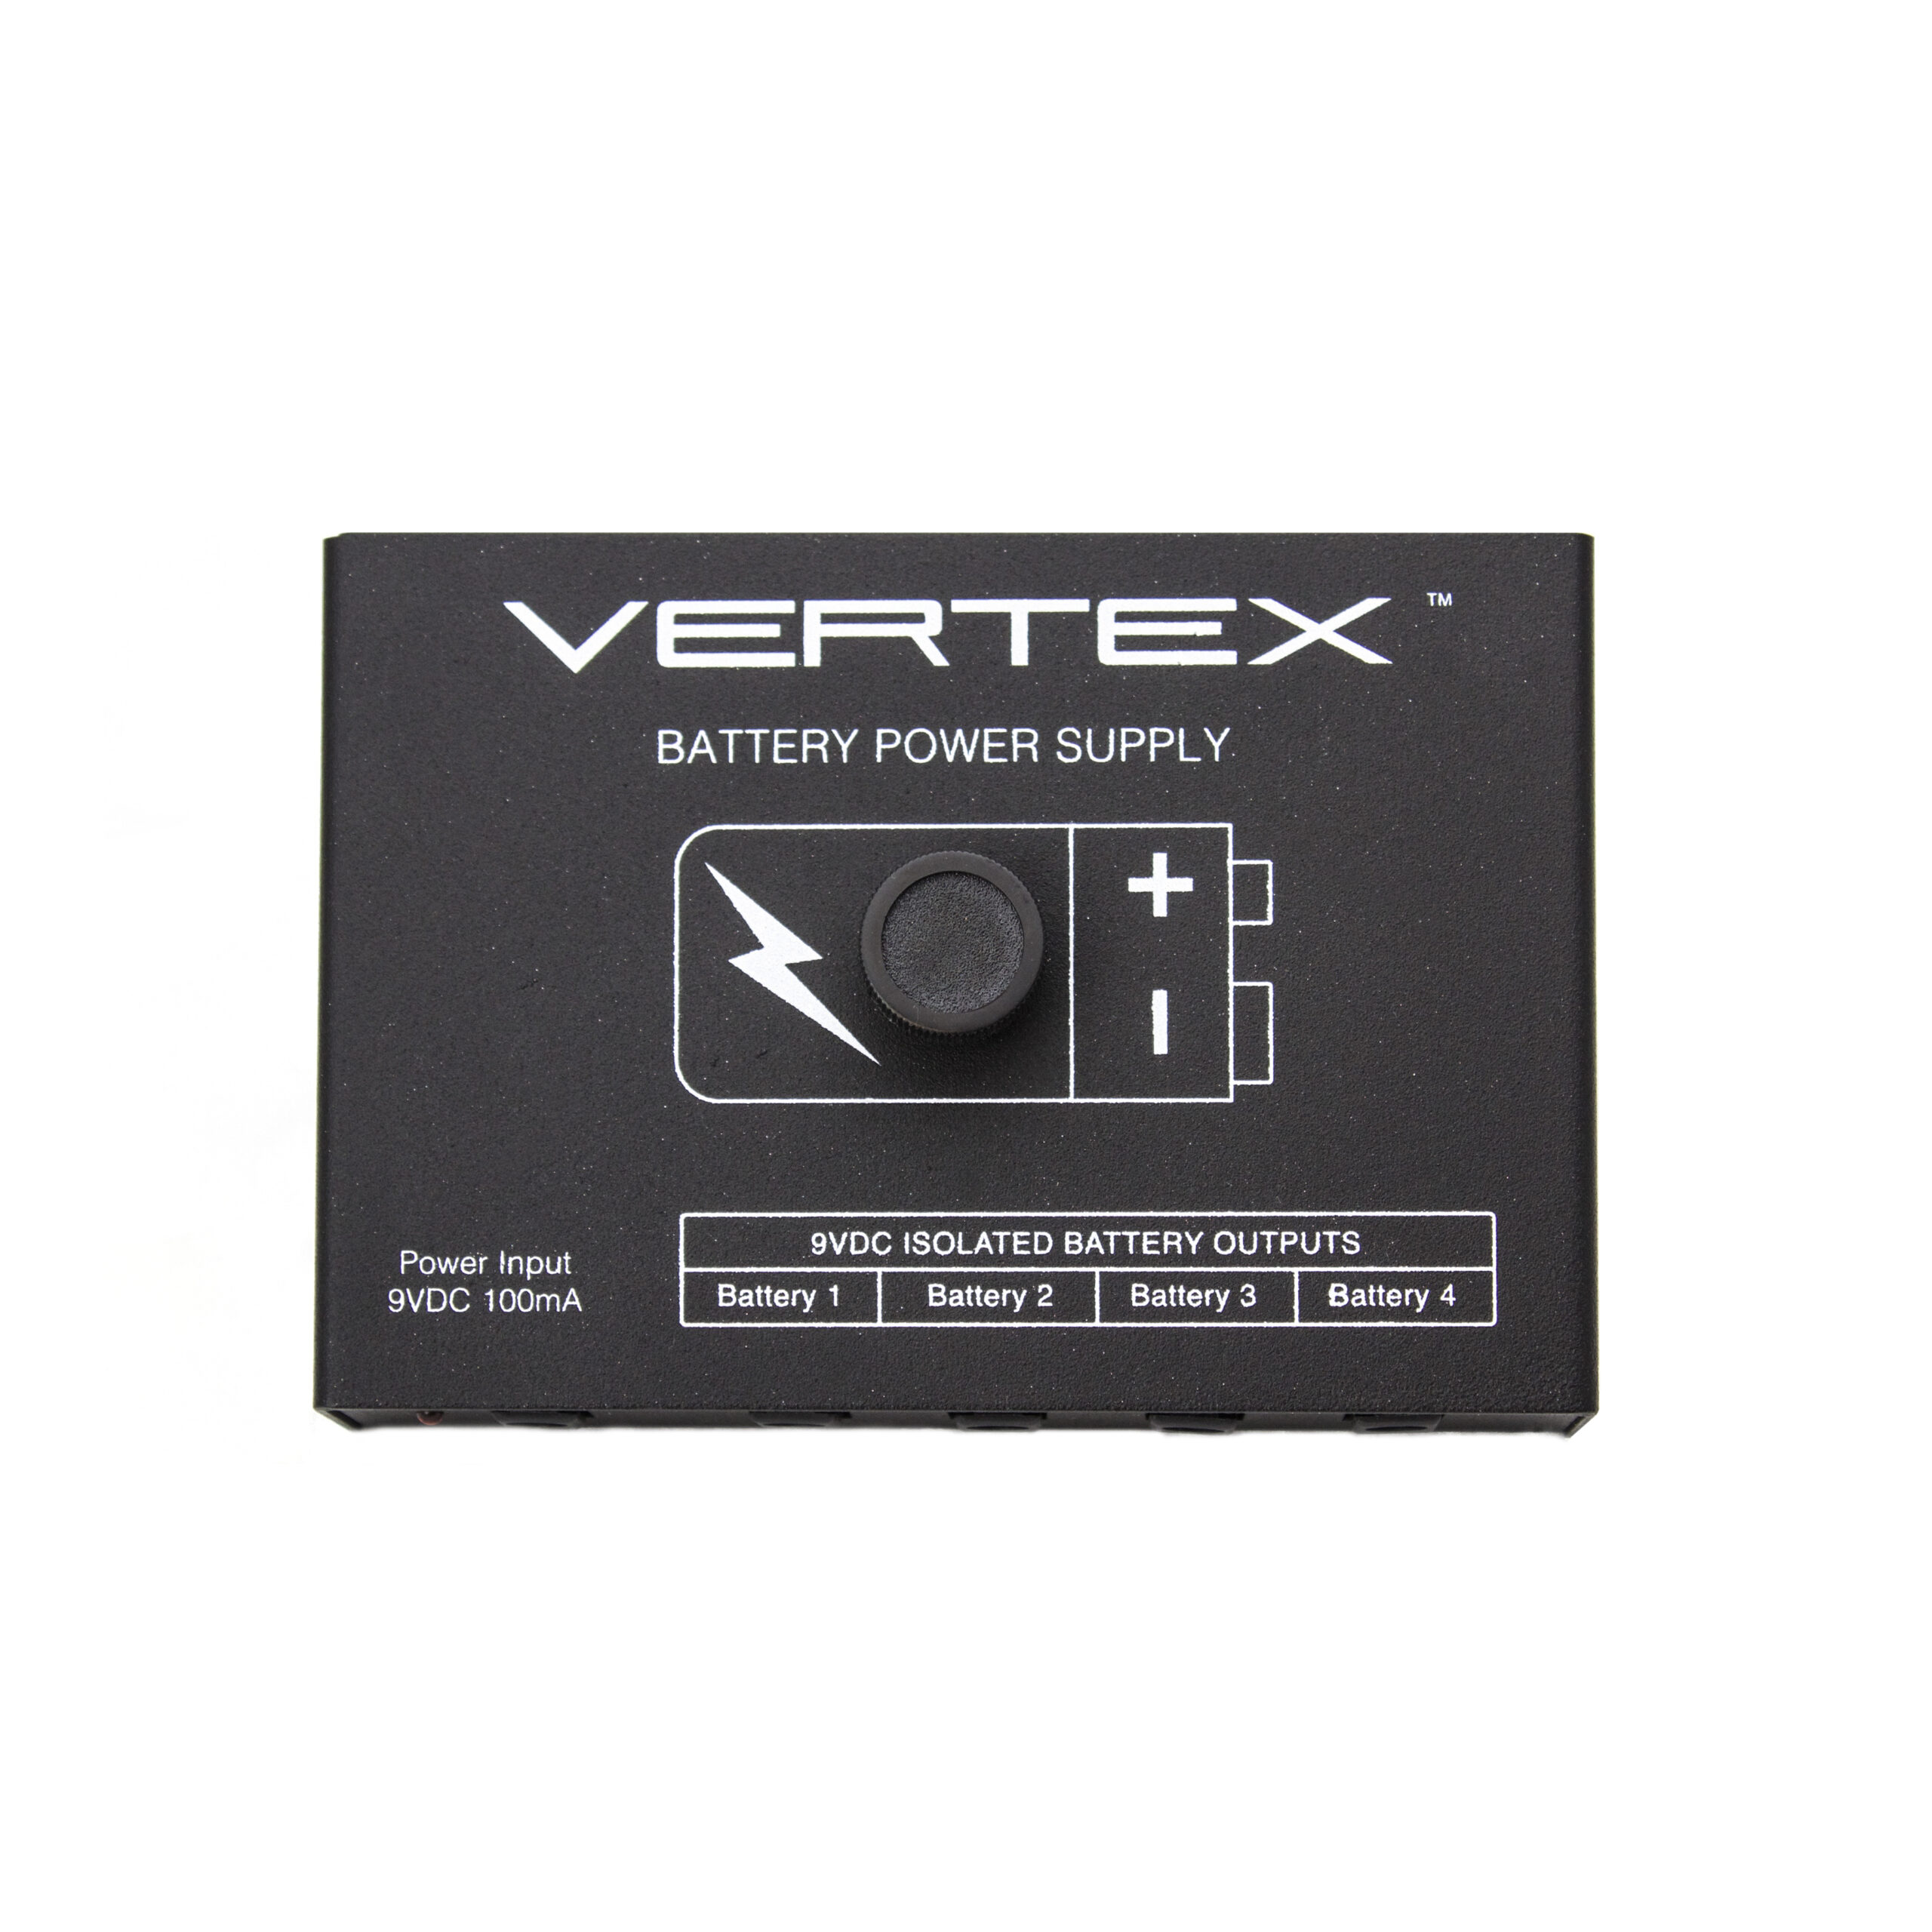 VERTEX BATTERY POWER SUPPLY - エフェクターパワーサプライ